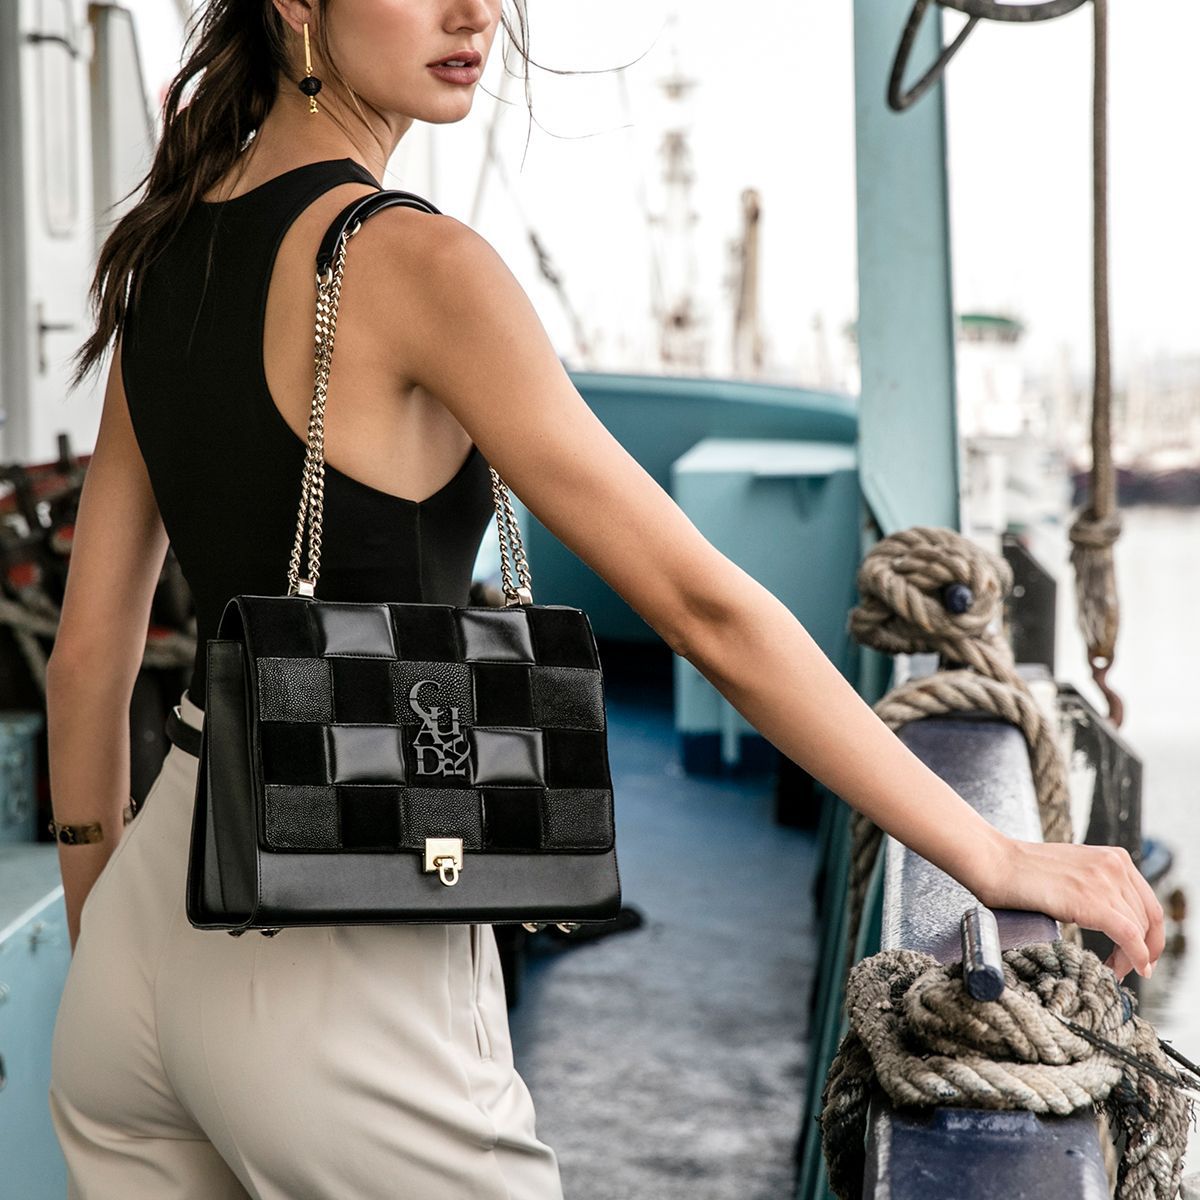 Style your Black exotic leather handbag